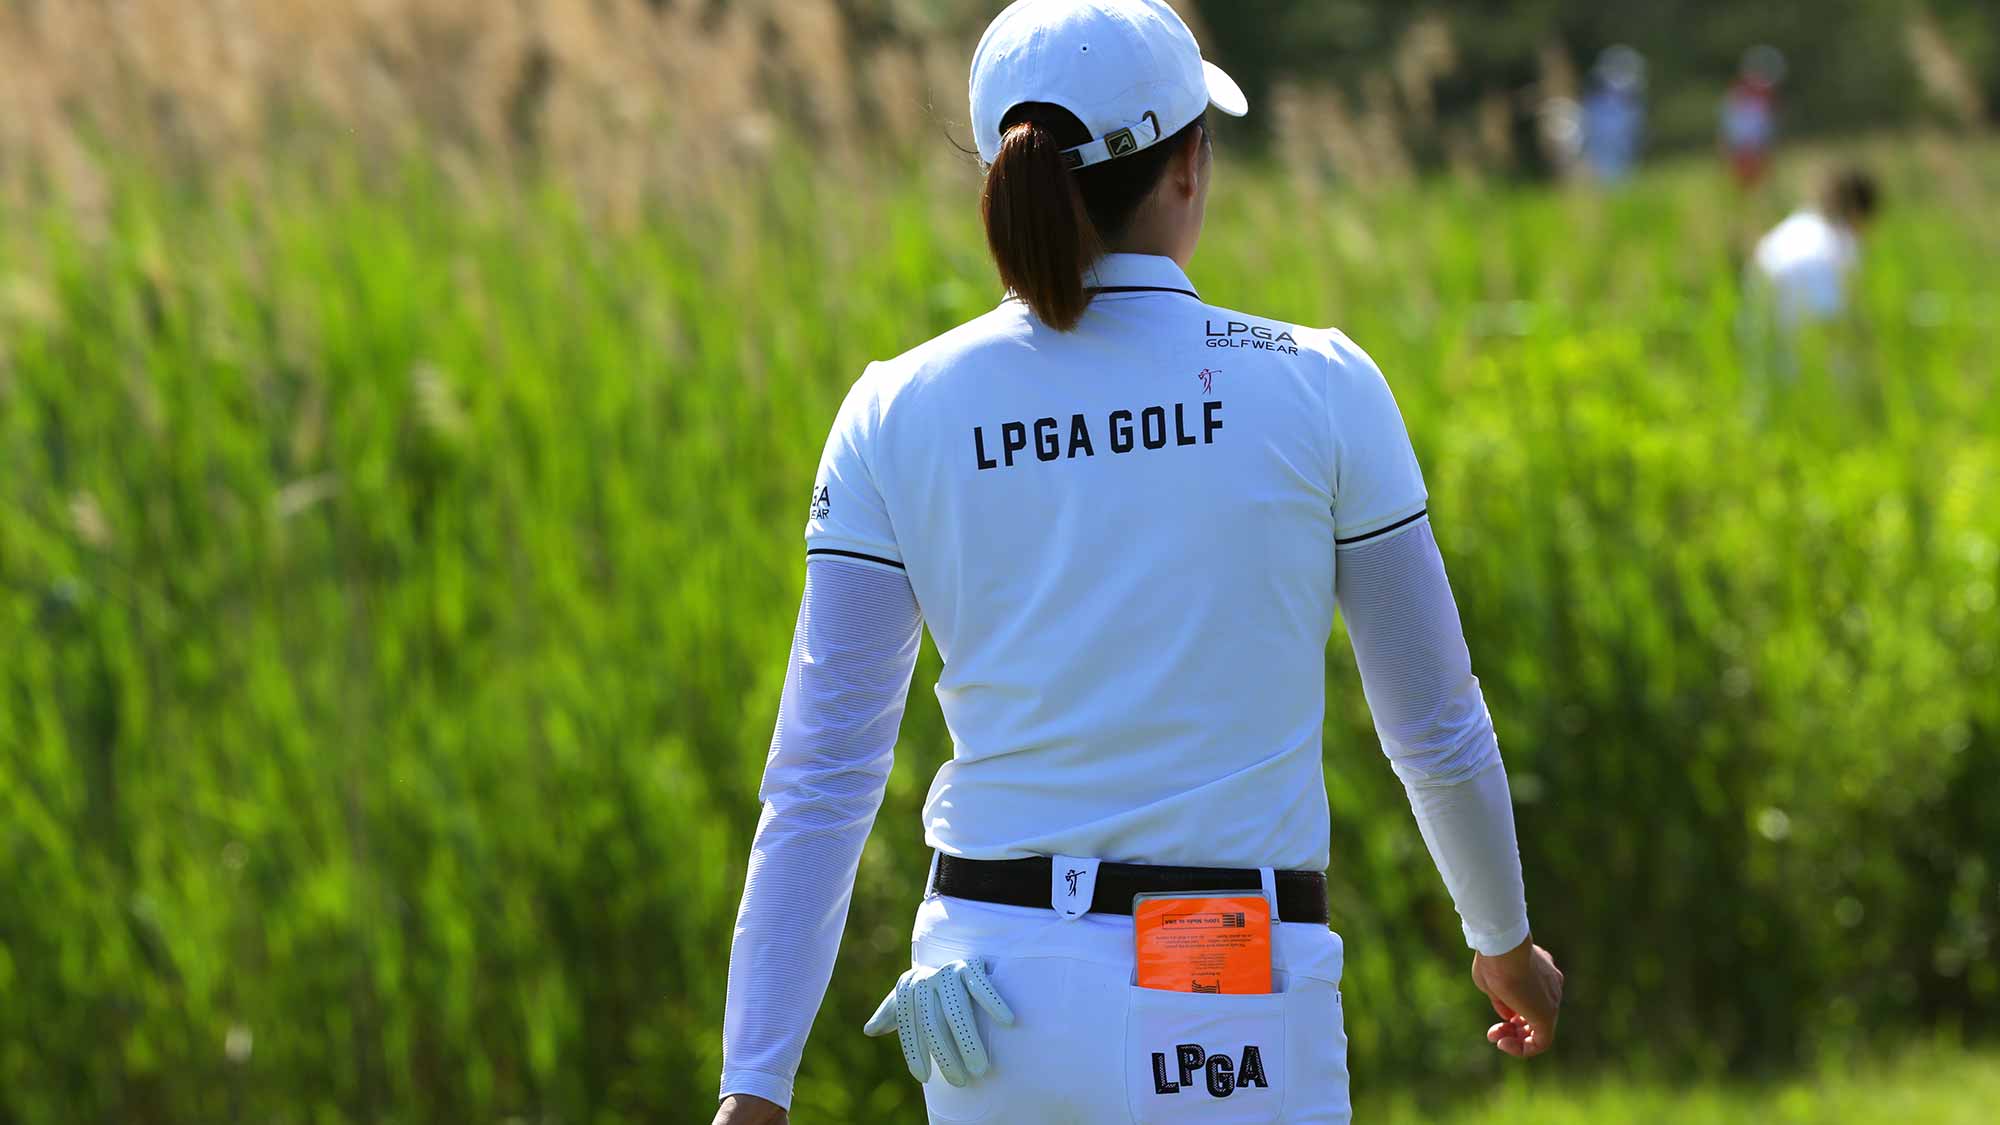 LPGA Golf Wear Opens its First Store in Gangnam LPGA Ladies